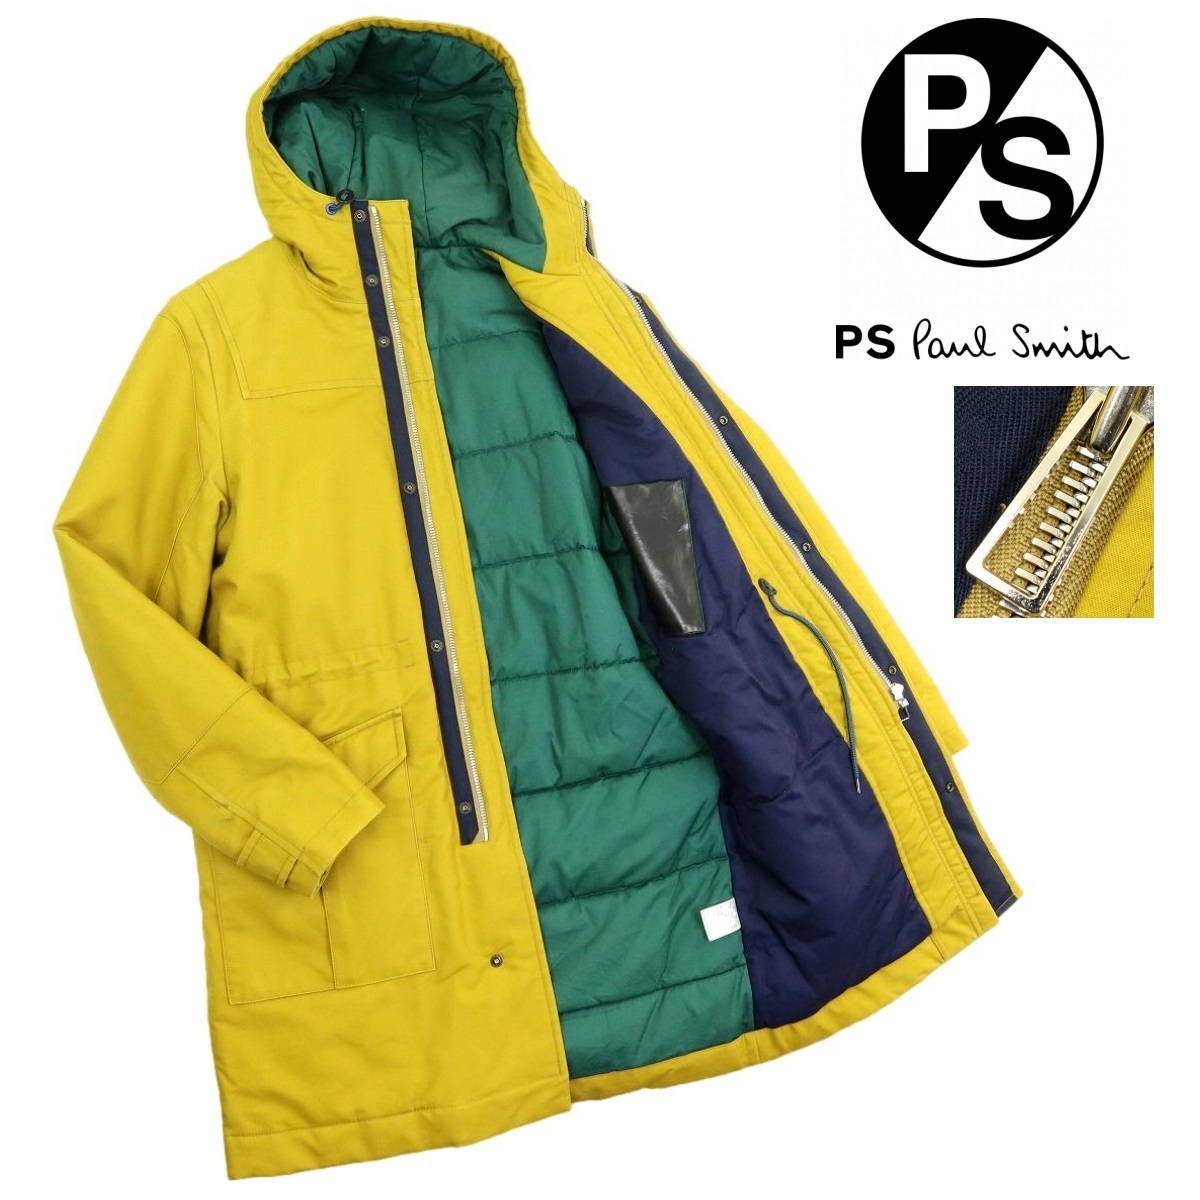 【B2660】PS Paul Smith ピーエスポールスミス コート ジャケット フード付 サイズM